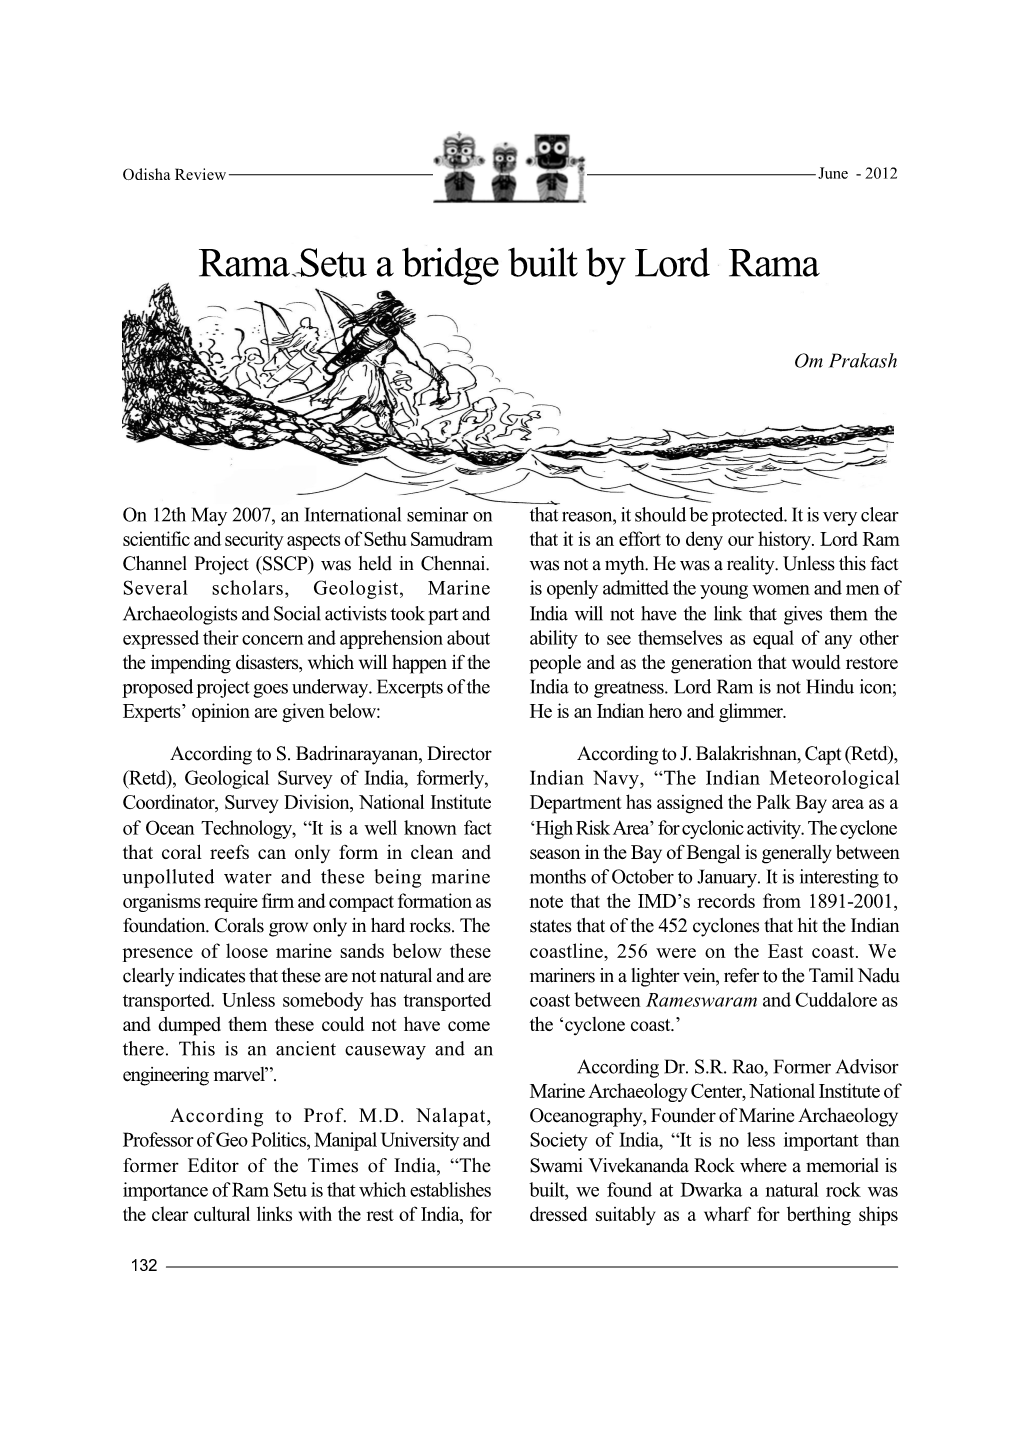 Rama Setu a Bridge Built by Lord Rama